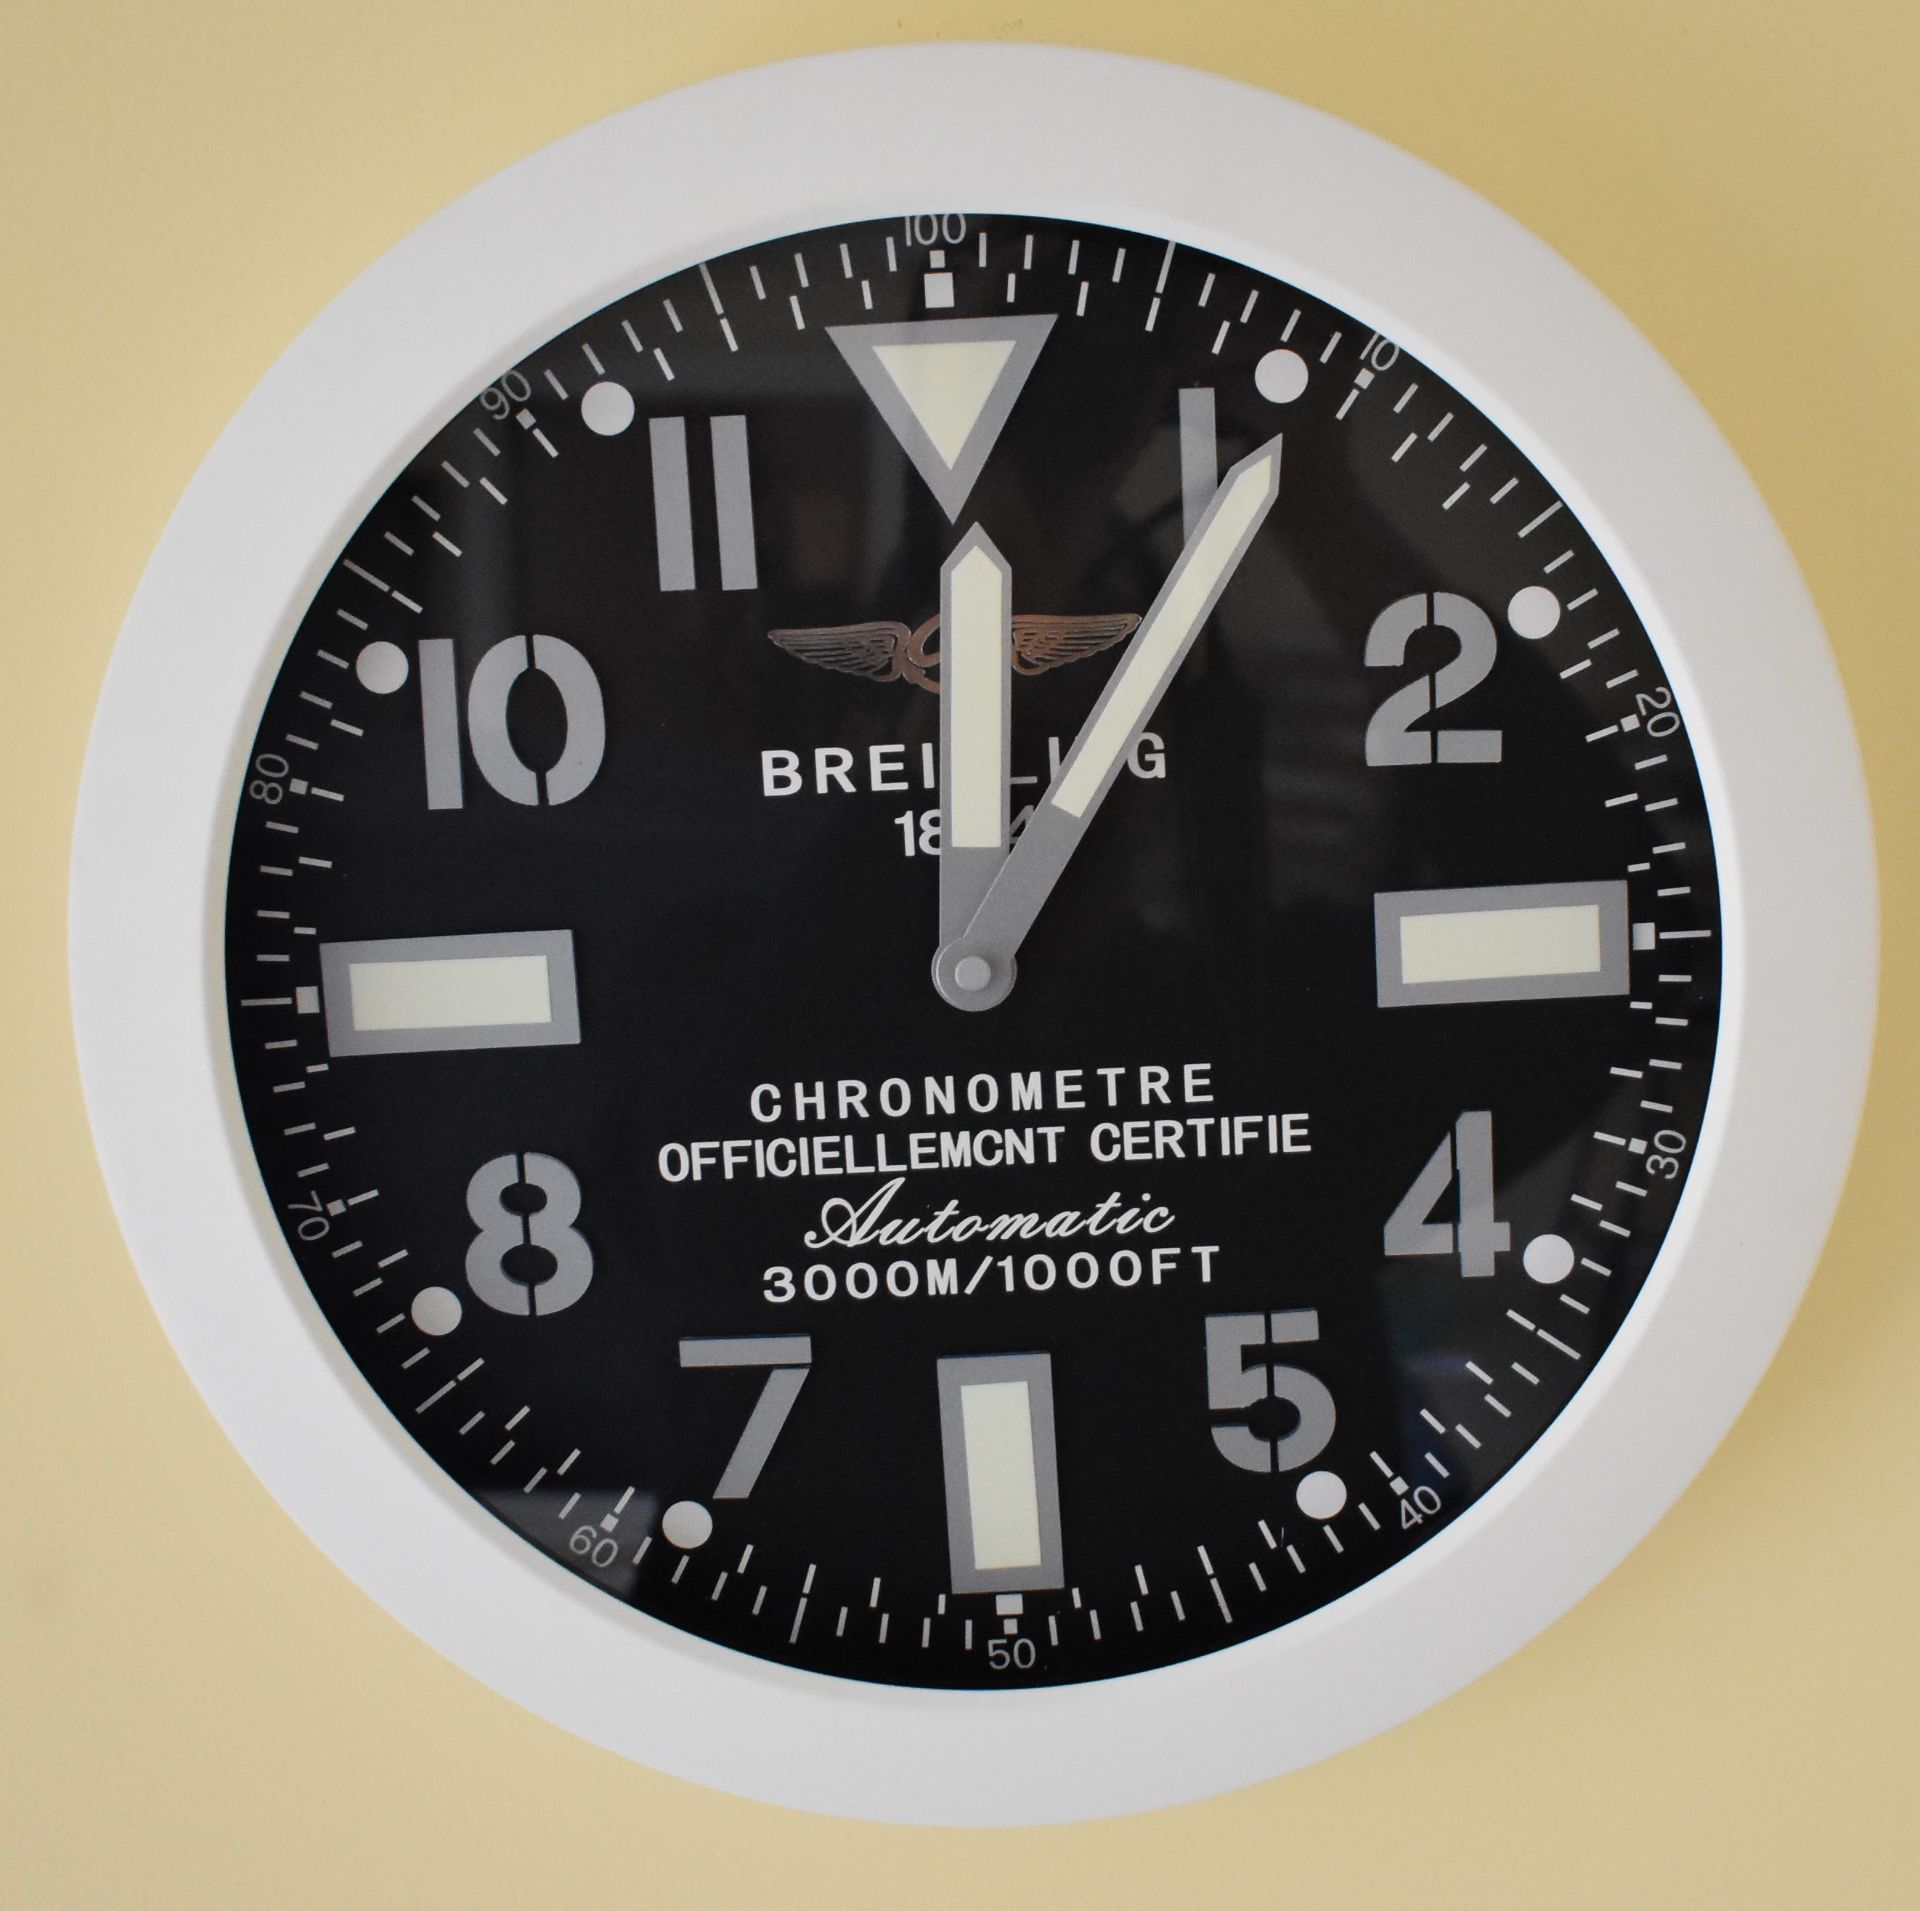 Breitling 34cm White body Black Dial clock - Image 2 of 2